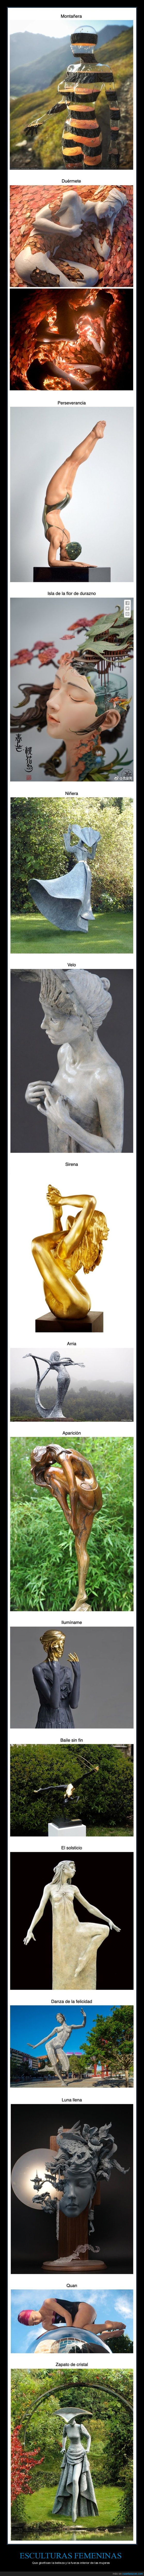 esculturas,mujeres,arte